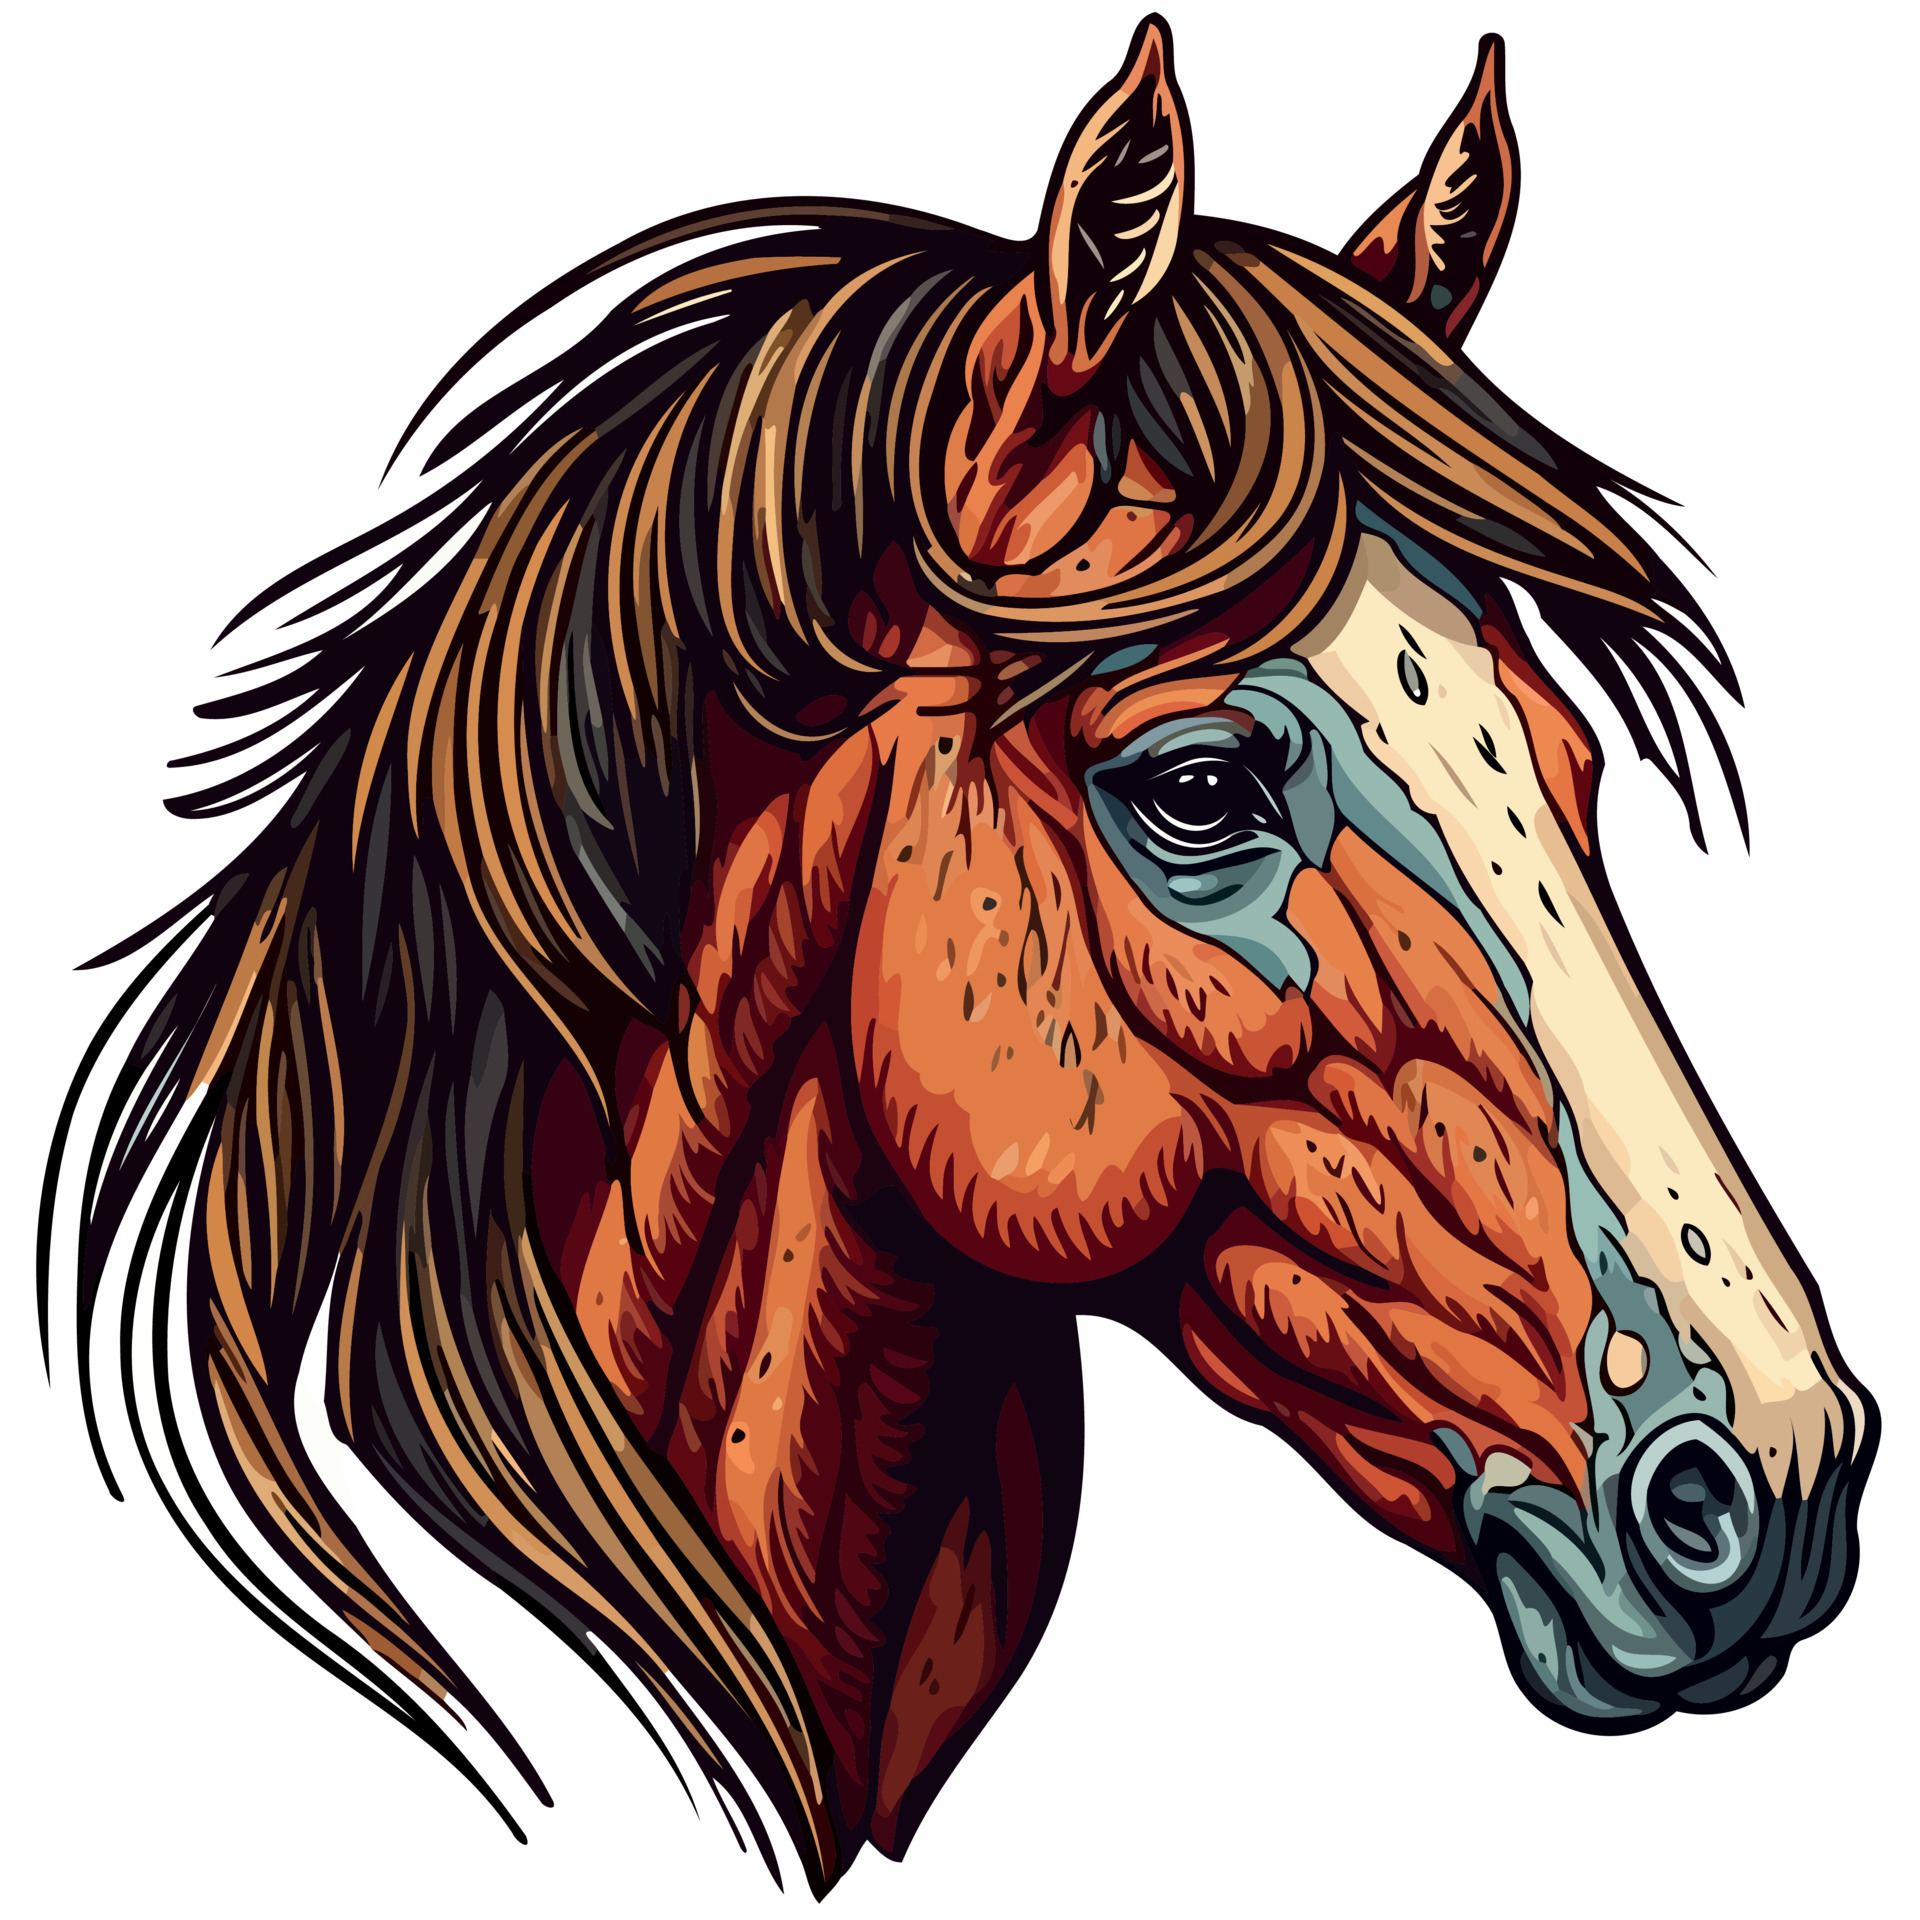 https://static.vecteezy.com/ti/vecteur-libre/p3/18884510-tete-d-animal-cheval-equin-vectoriel.jpg